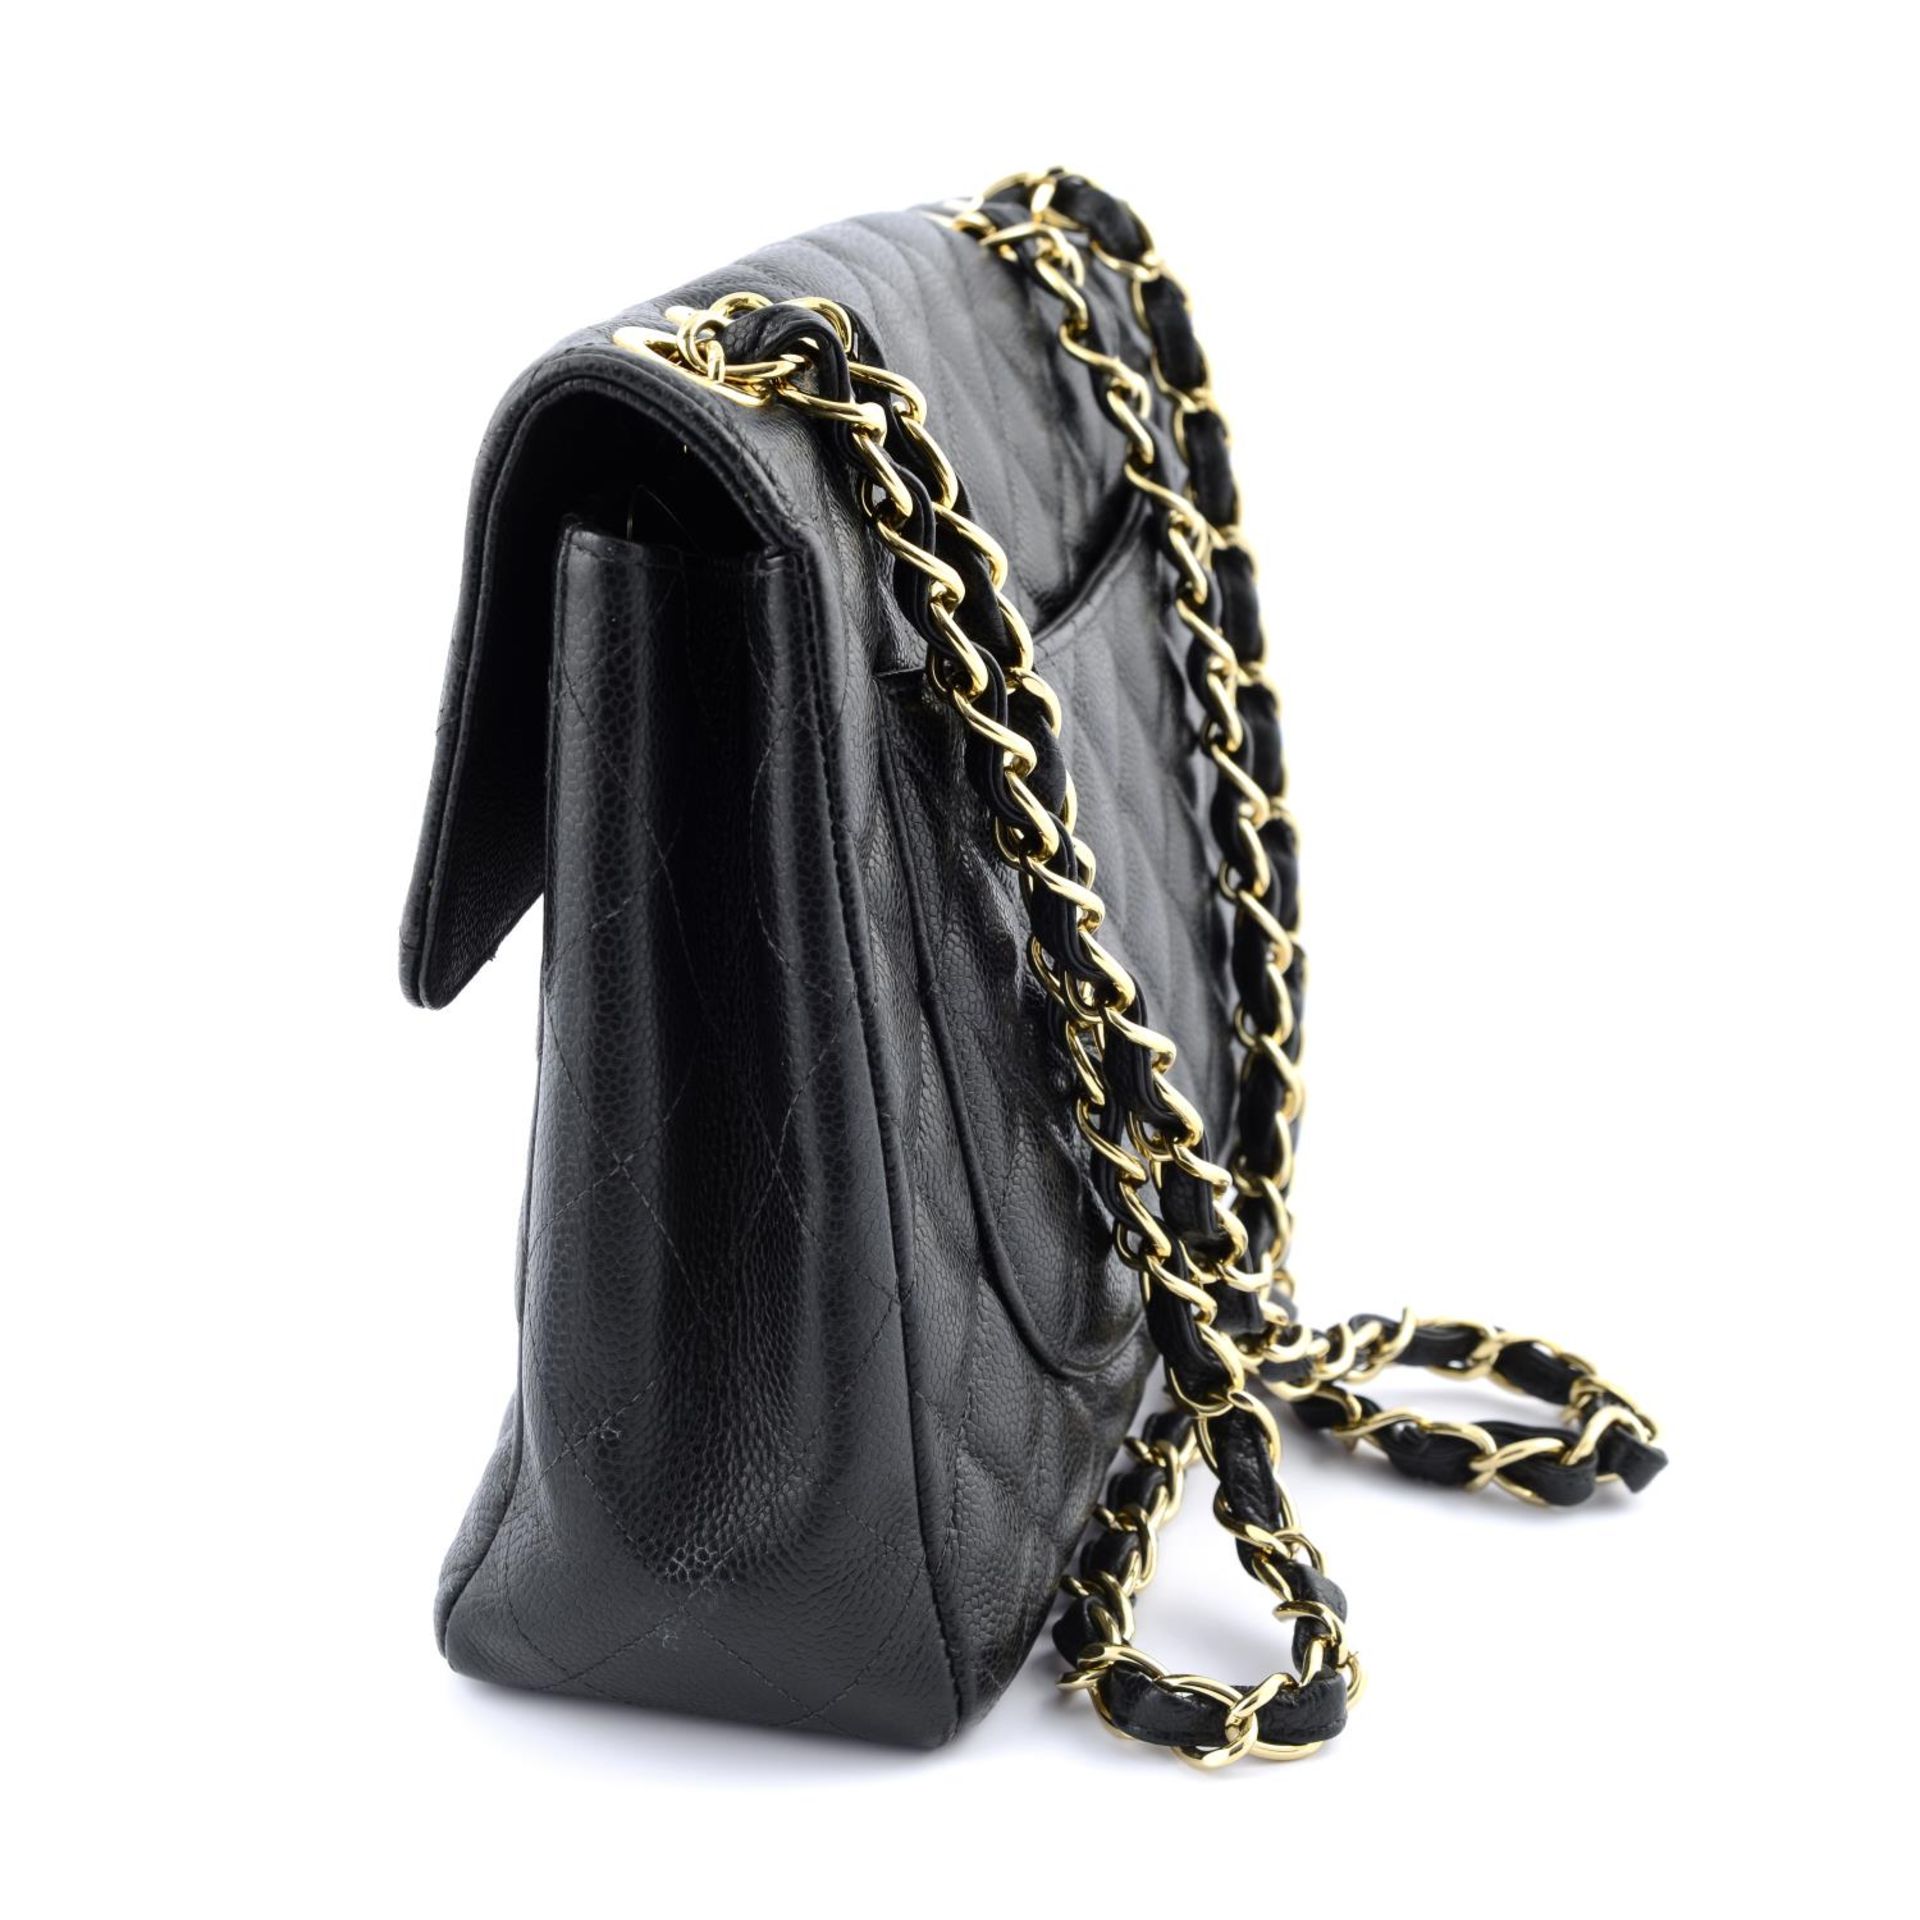 CHANEL - a Jumbo Caviar Classic Flap handbag. - Bild 3 aus 4